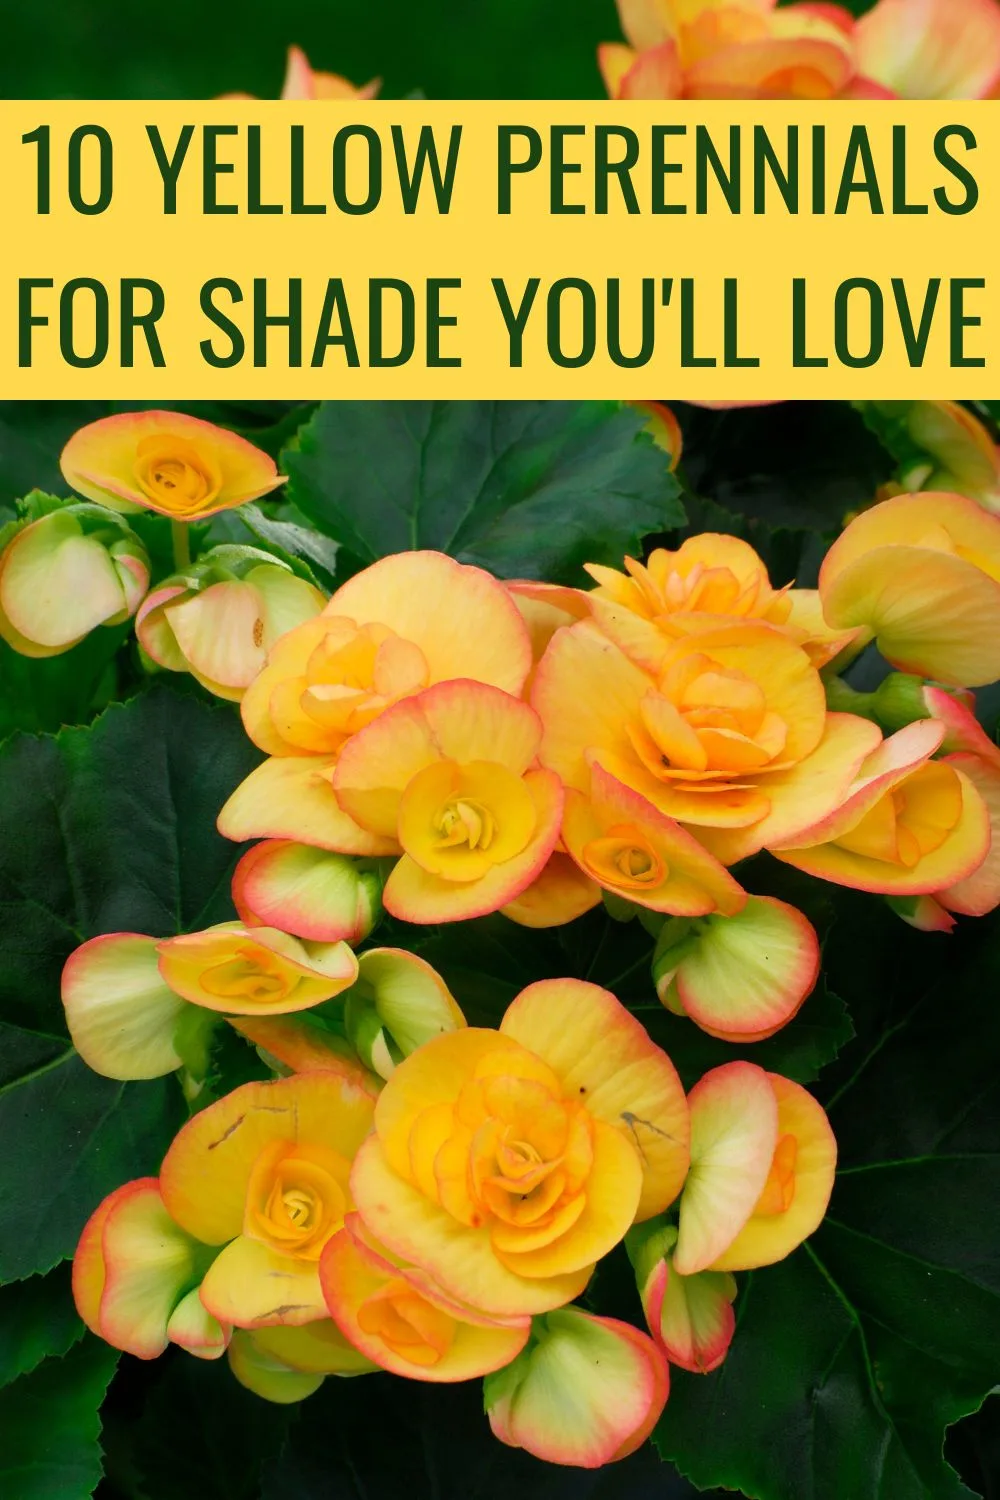 10 yellow perennials for shade you'll love.